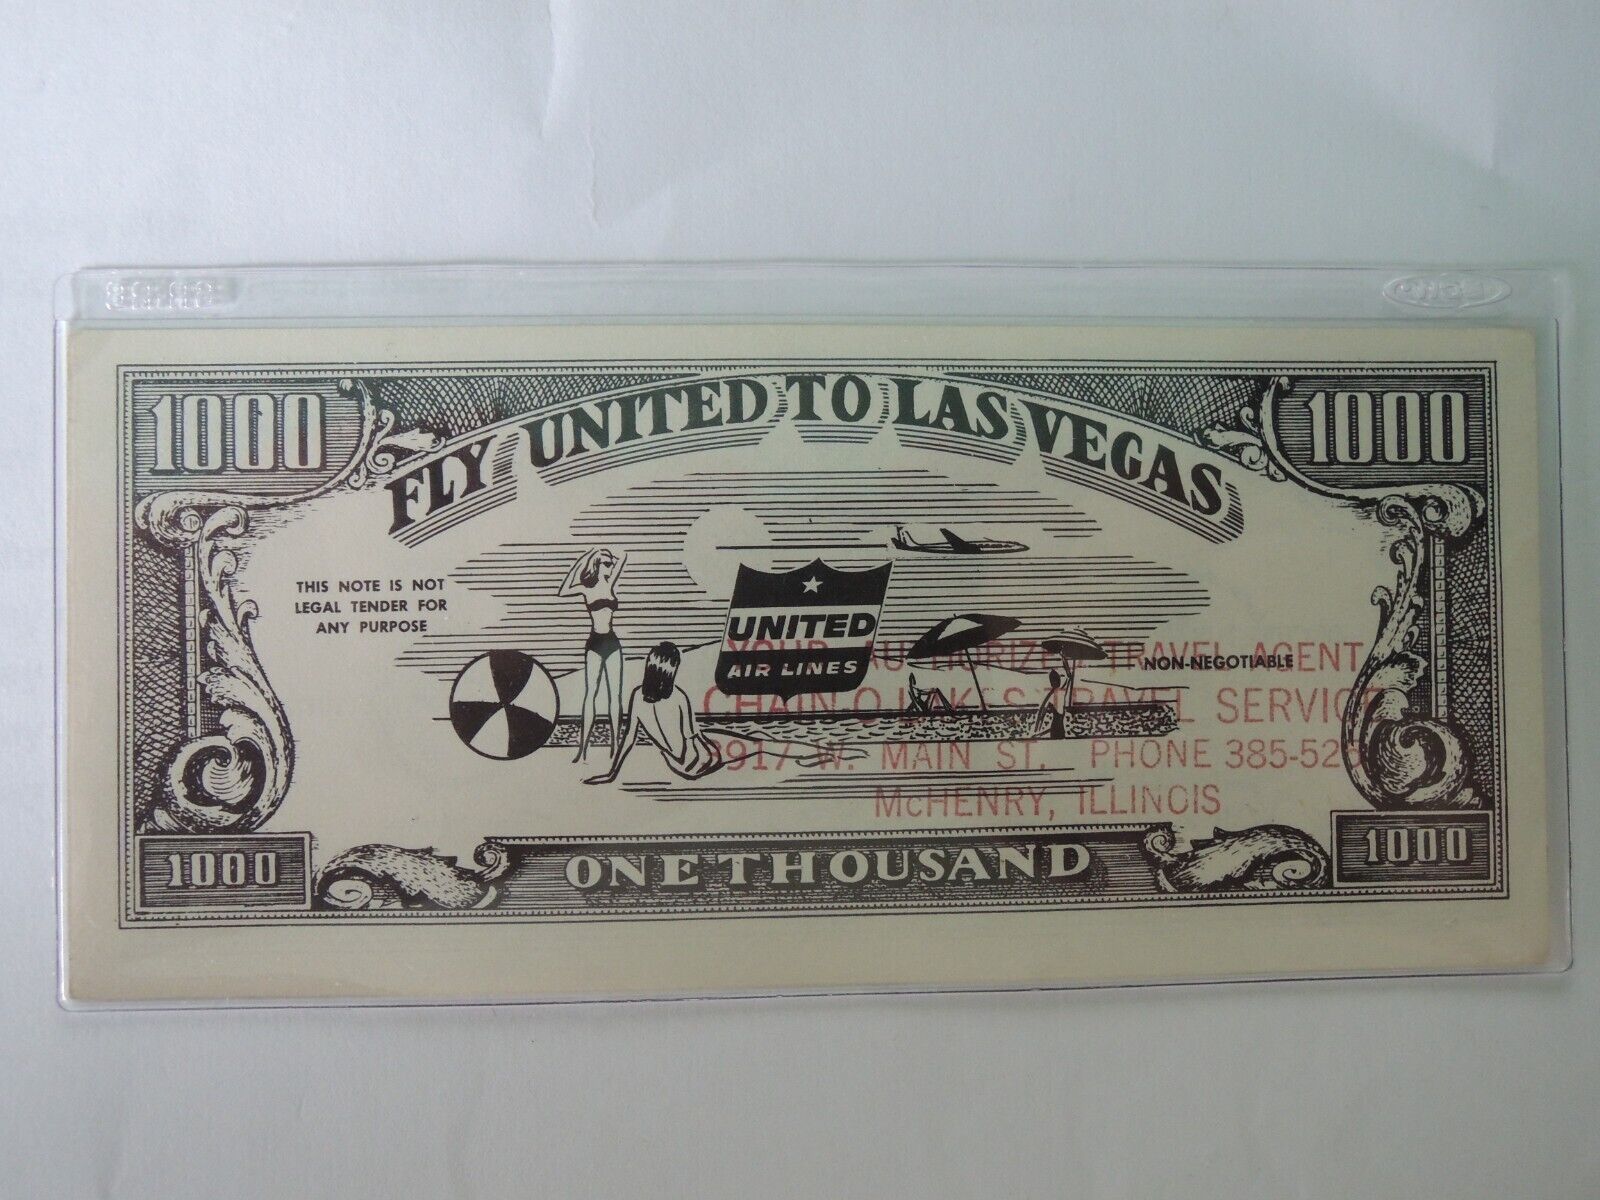 1954 Las Vegas Loot 1000 Dollar Bill. Fly United to Las Vegas. United Air Lines